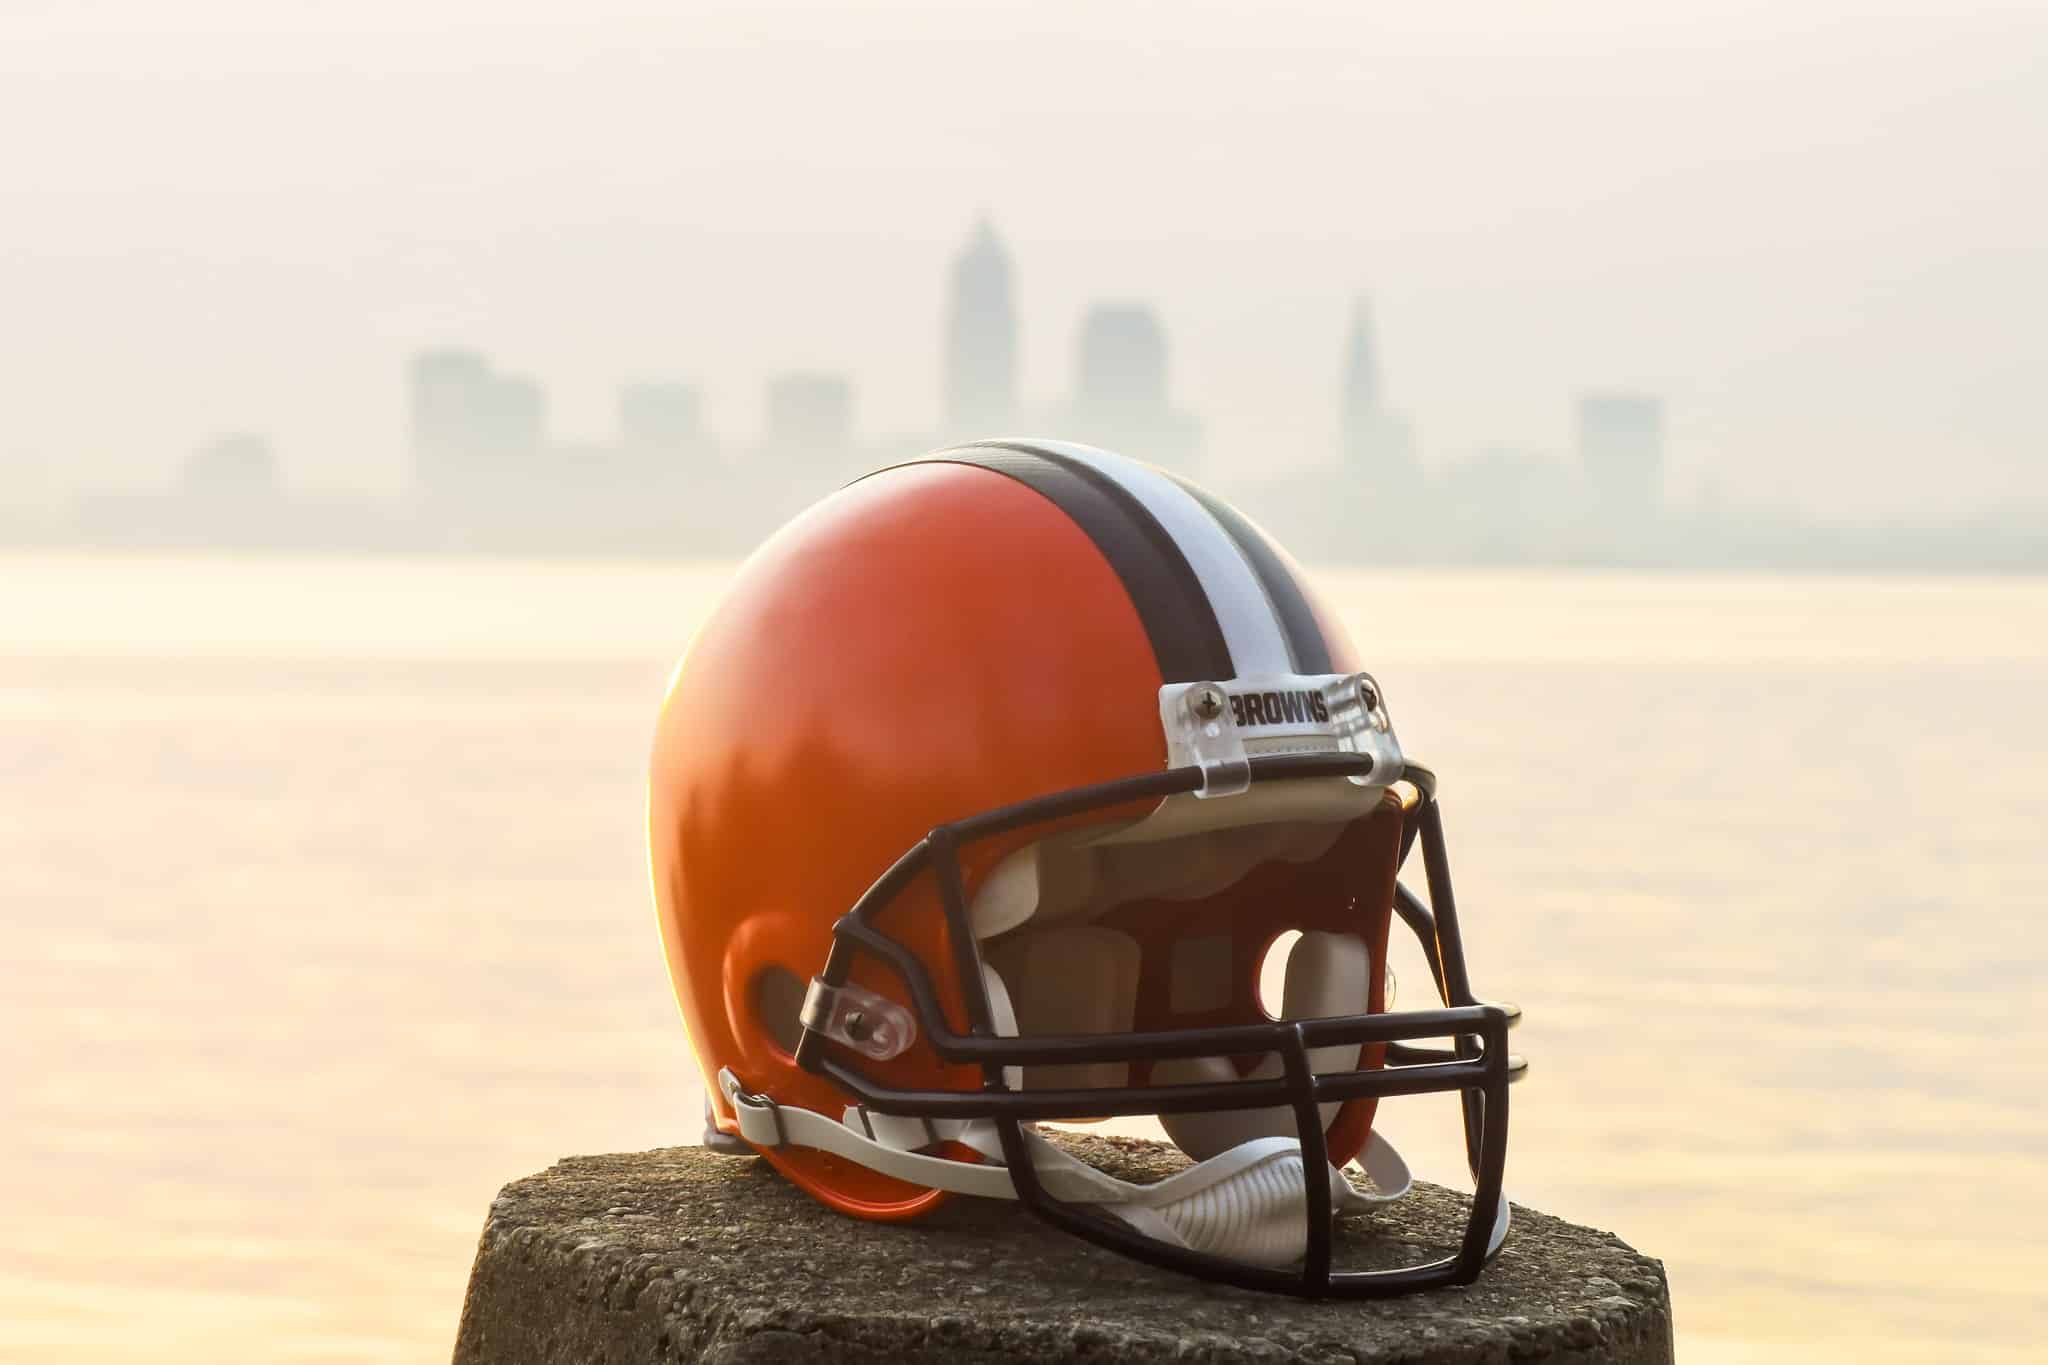 Cleveland Browns Helmet. Photo Credit: Erik Drost | Under Creative Commons License